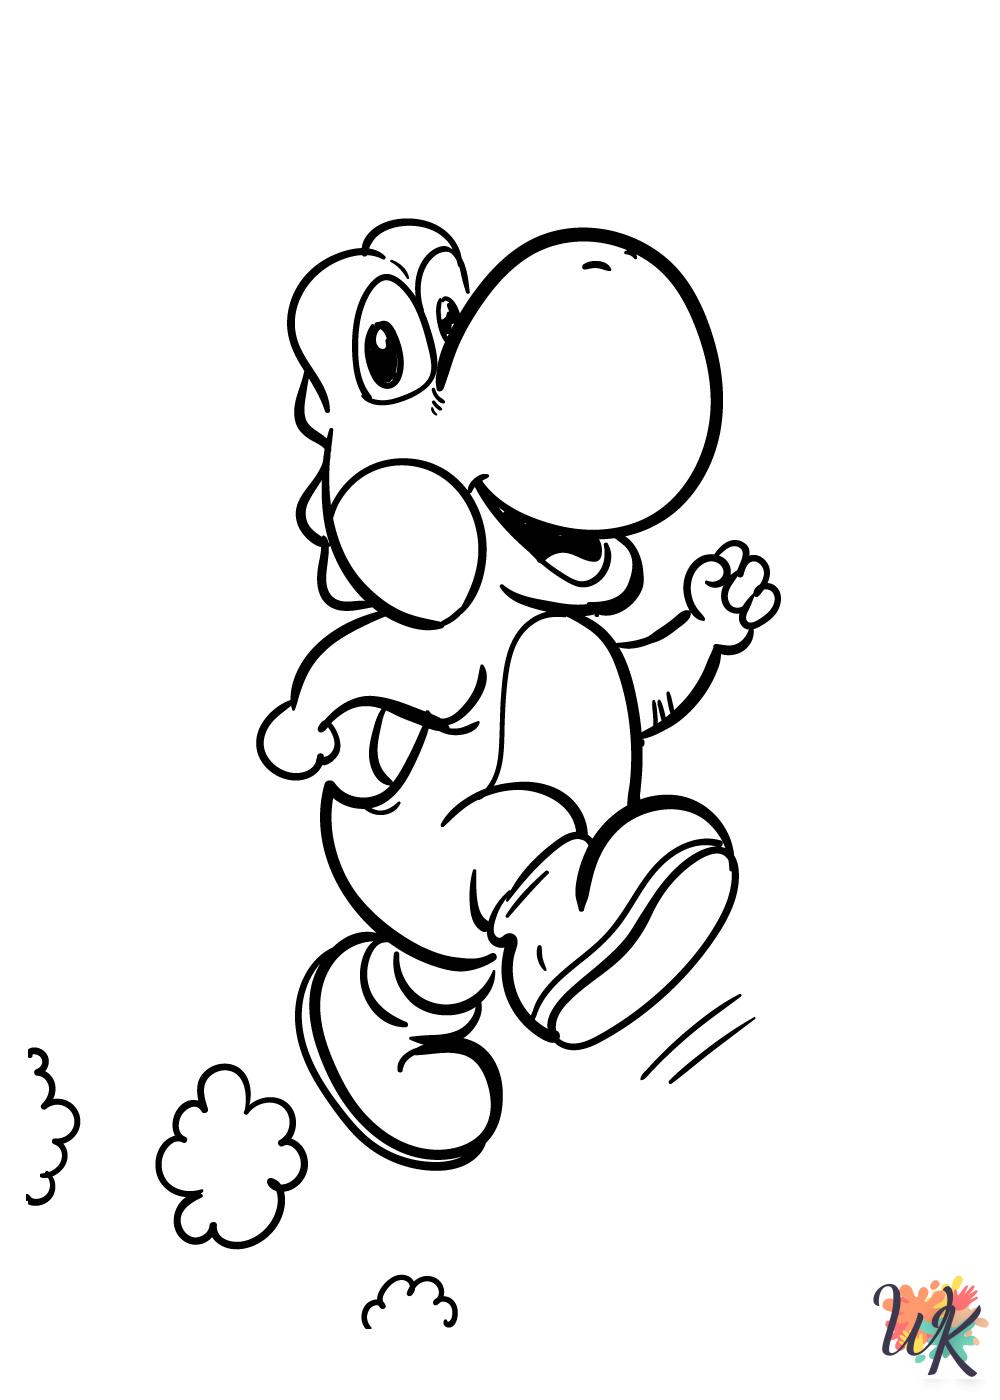 Super Mario Bros coloring pages free